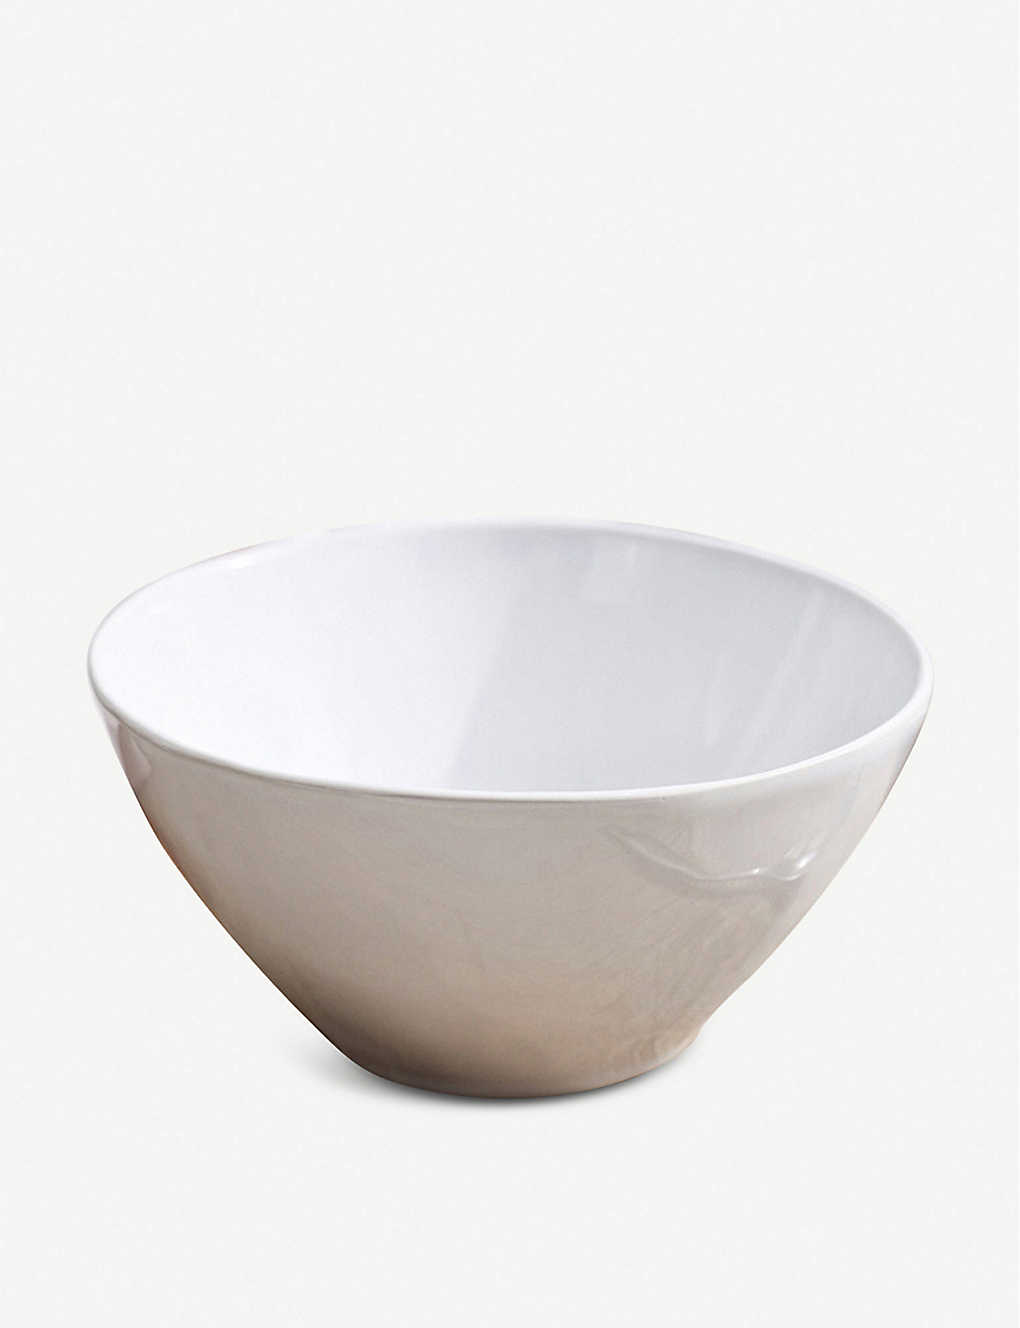 THE WHITE COMPANY |gx Xg[EFA VA {E Portobello stoneware cereal bowl #Grey